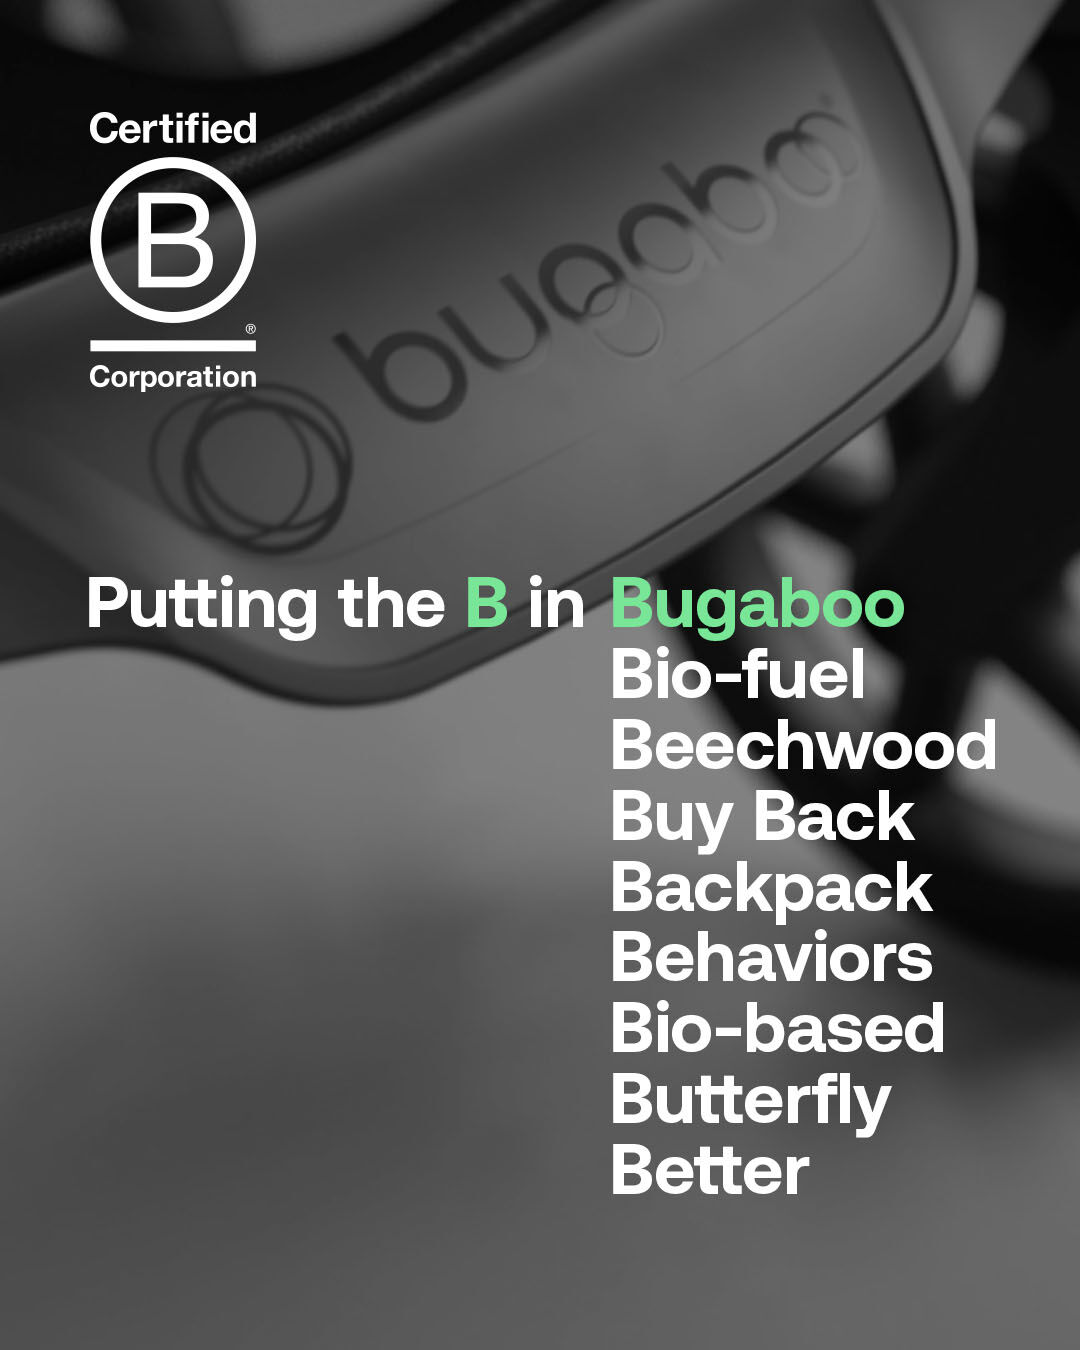 Bugaboo is B Corp Certified | Bugaboo